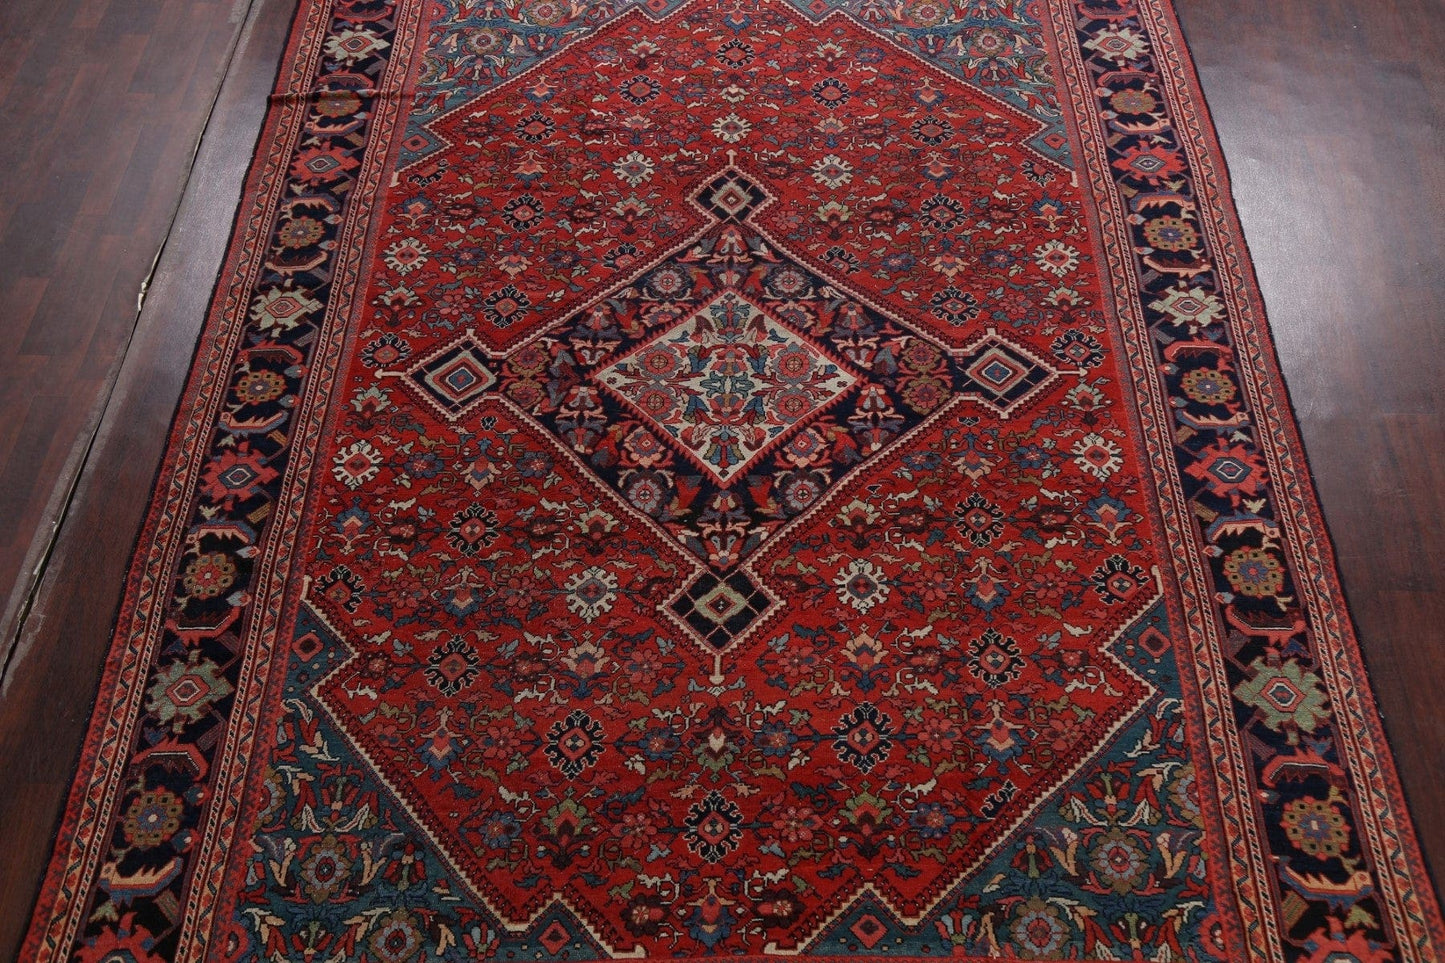 Antique Vegetable Dye Geometric Mahal Persian Area Rug 9x12